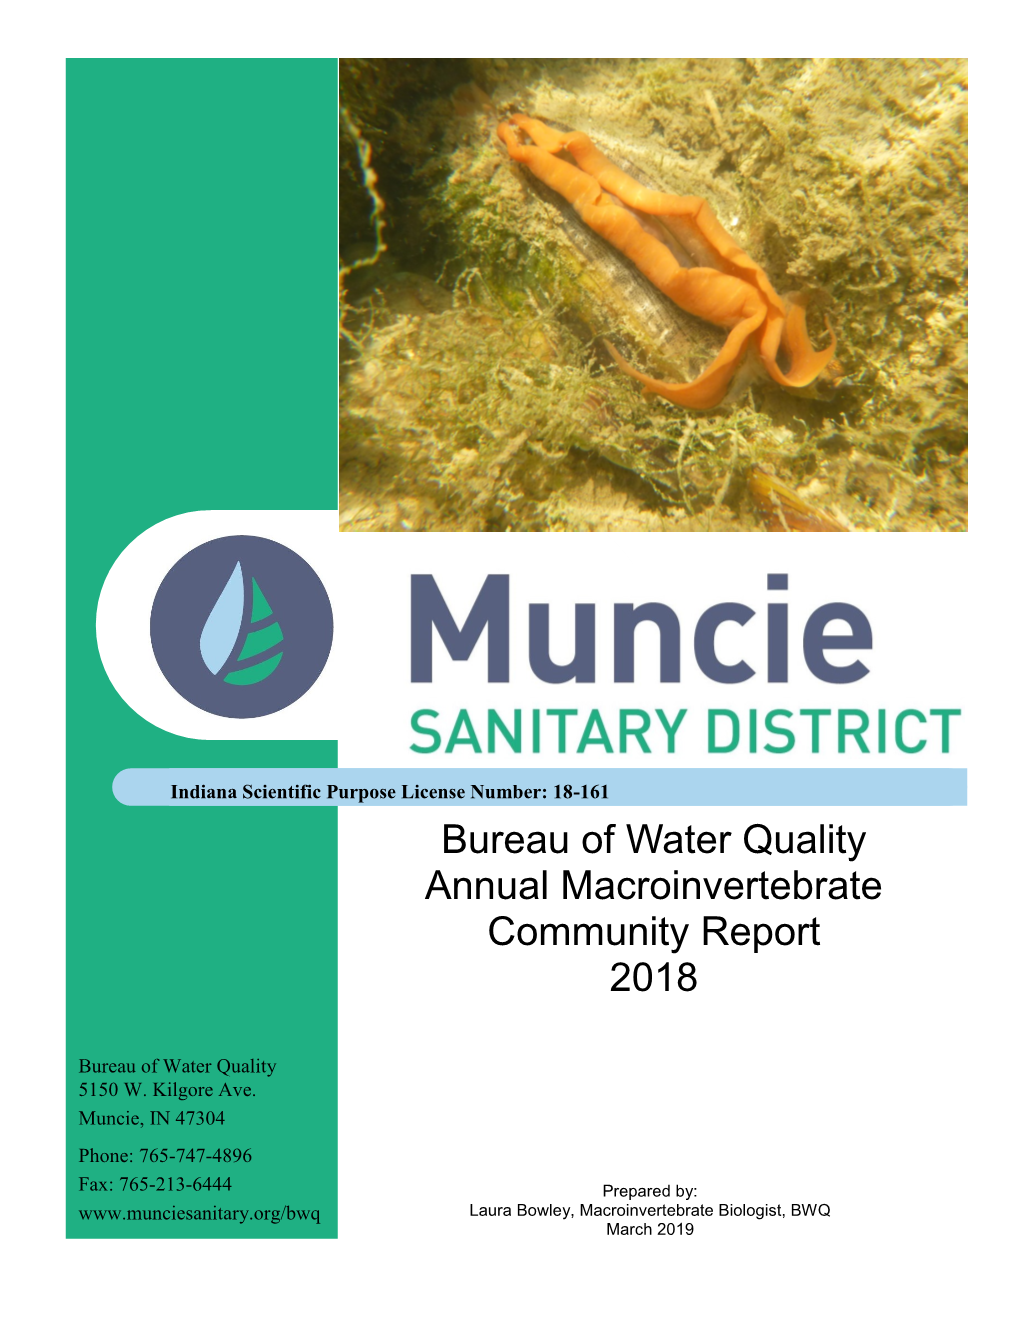 Bureau of Water Quality Annual Macroinvertebrate Community Report 2018